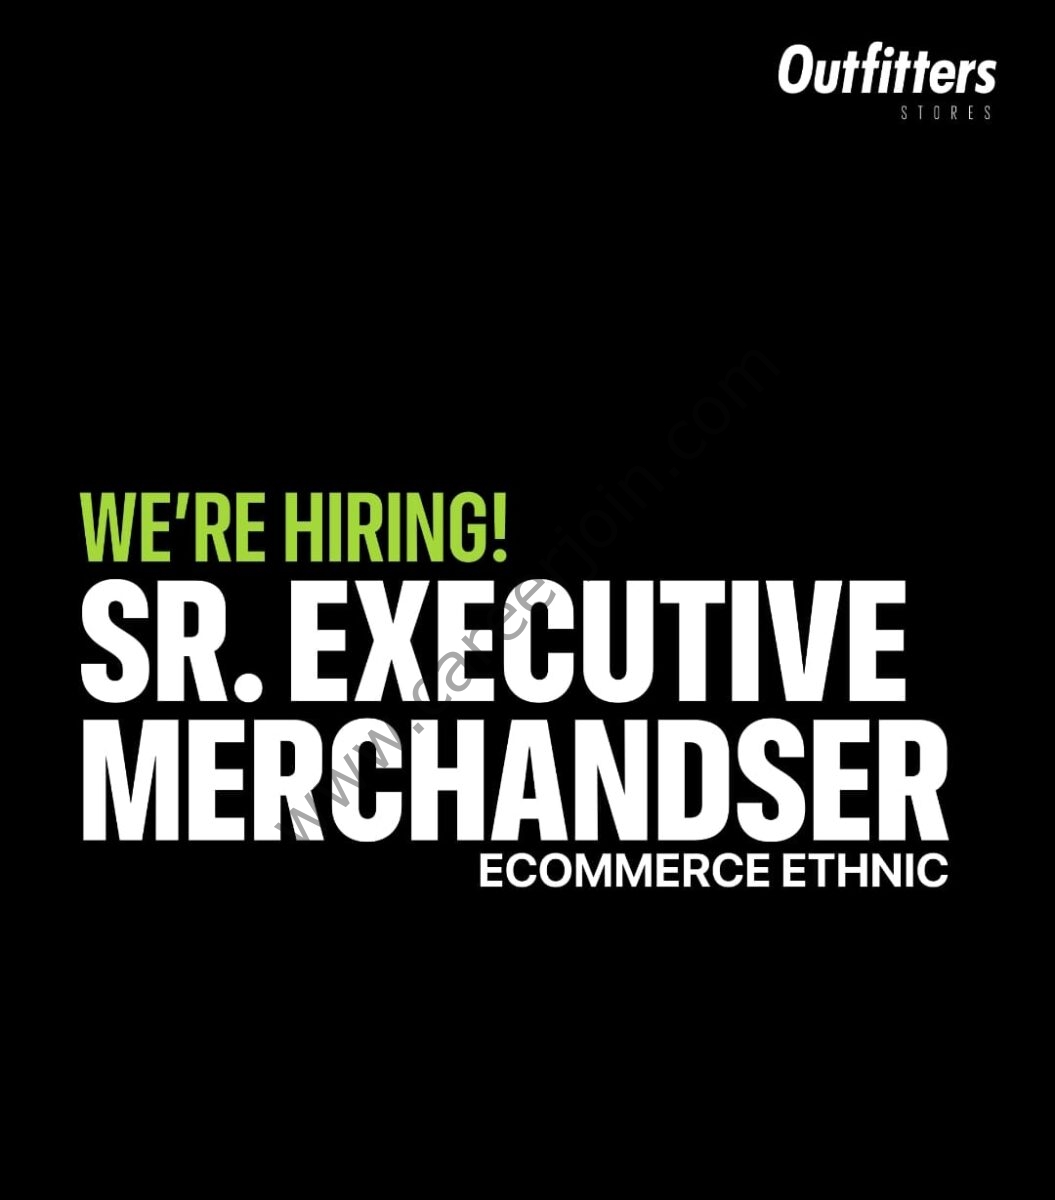 Outfitters Stores Pvt Ltd Jobs Senior Executive Merchandiser 1